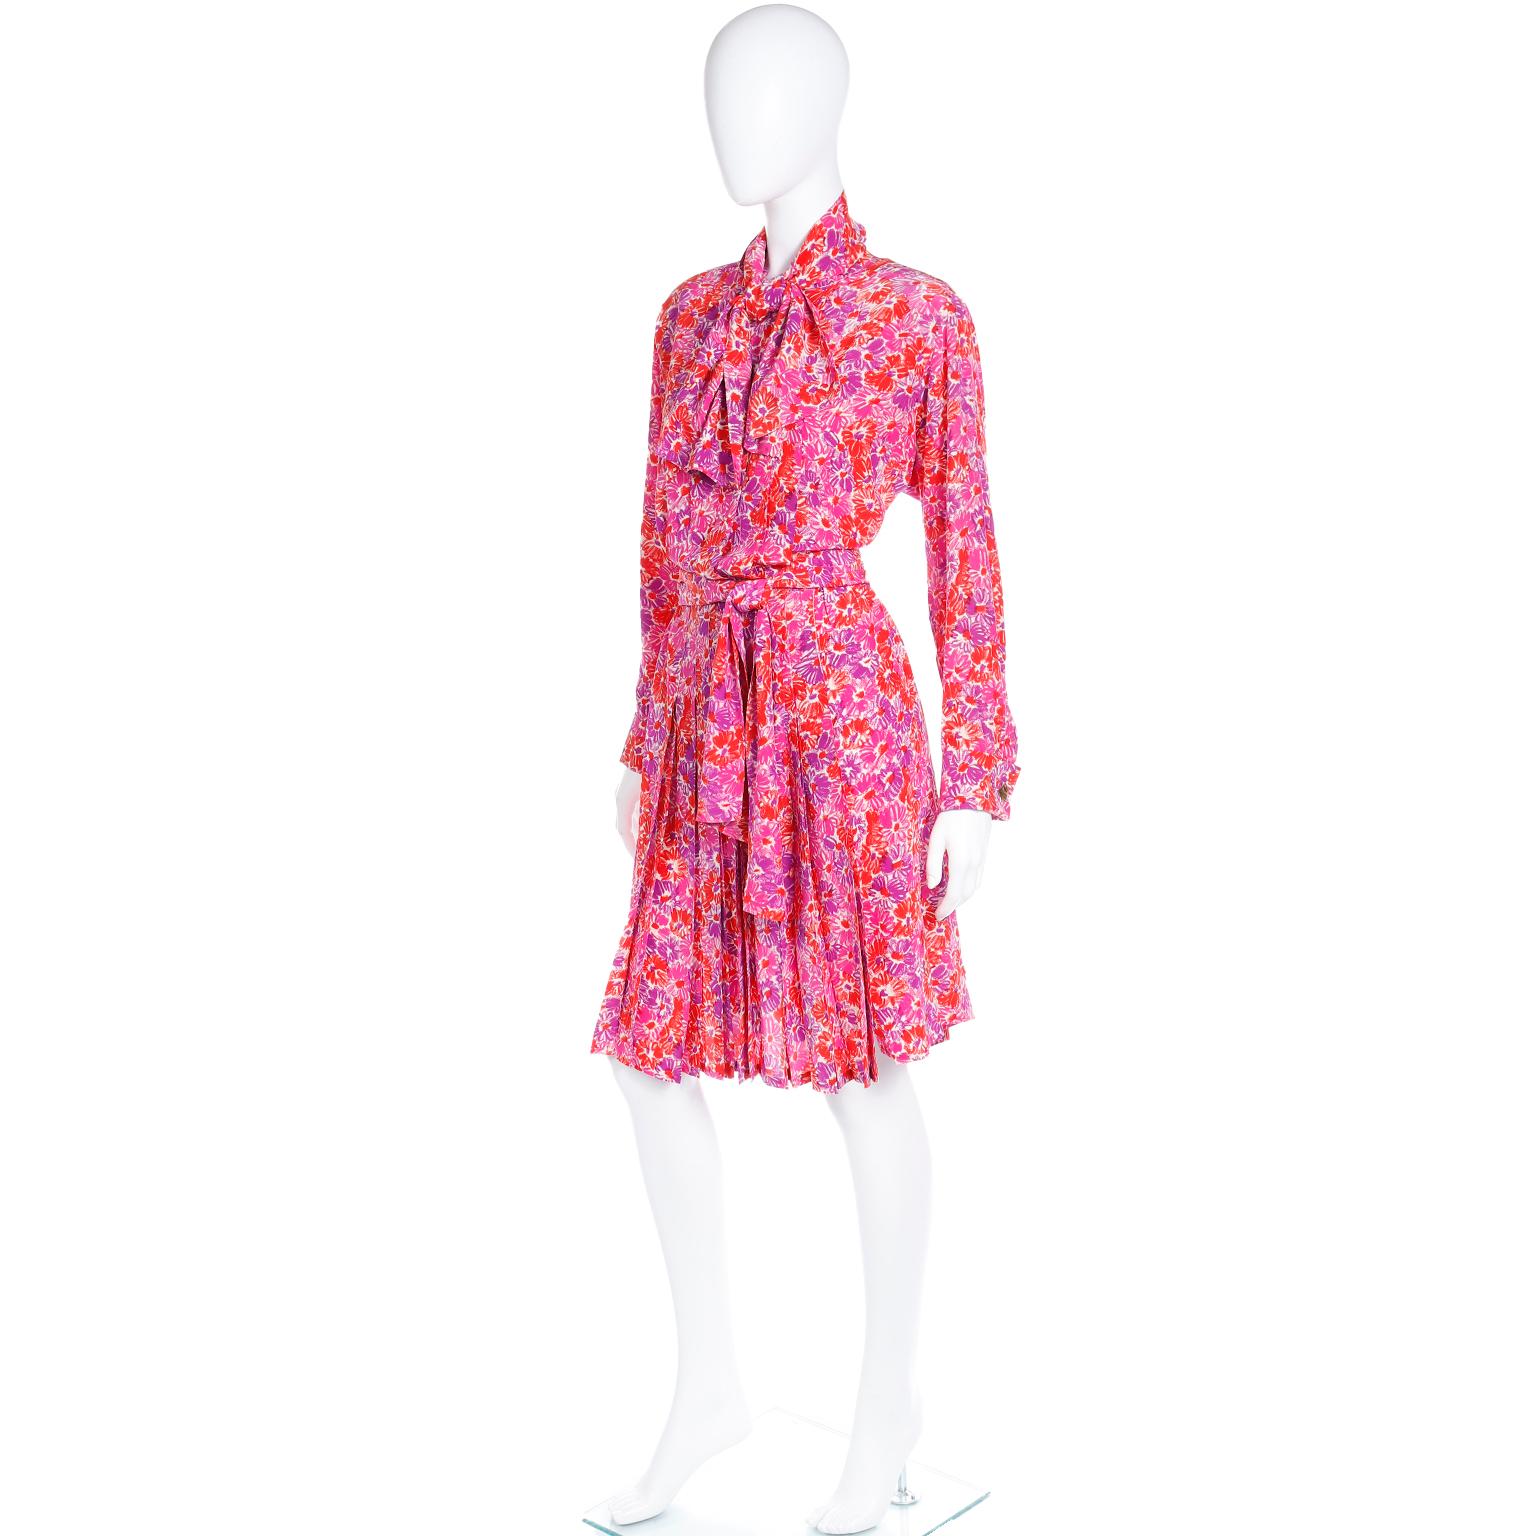 Women's Yves Saint Laurent S/S 1989 Vintage Colorful Pink Floral Silk YSL Runway Dress For Sale